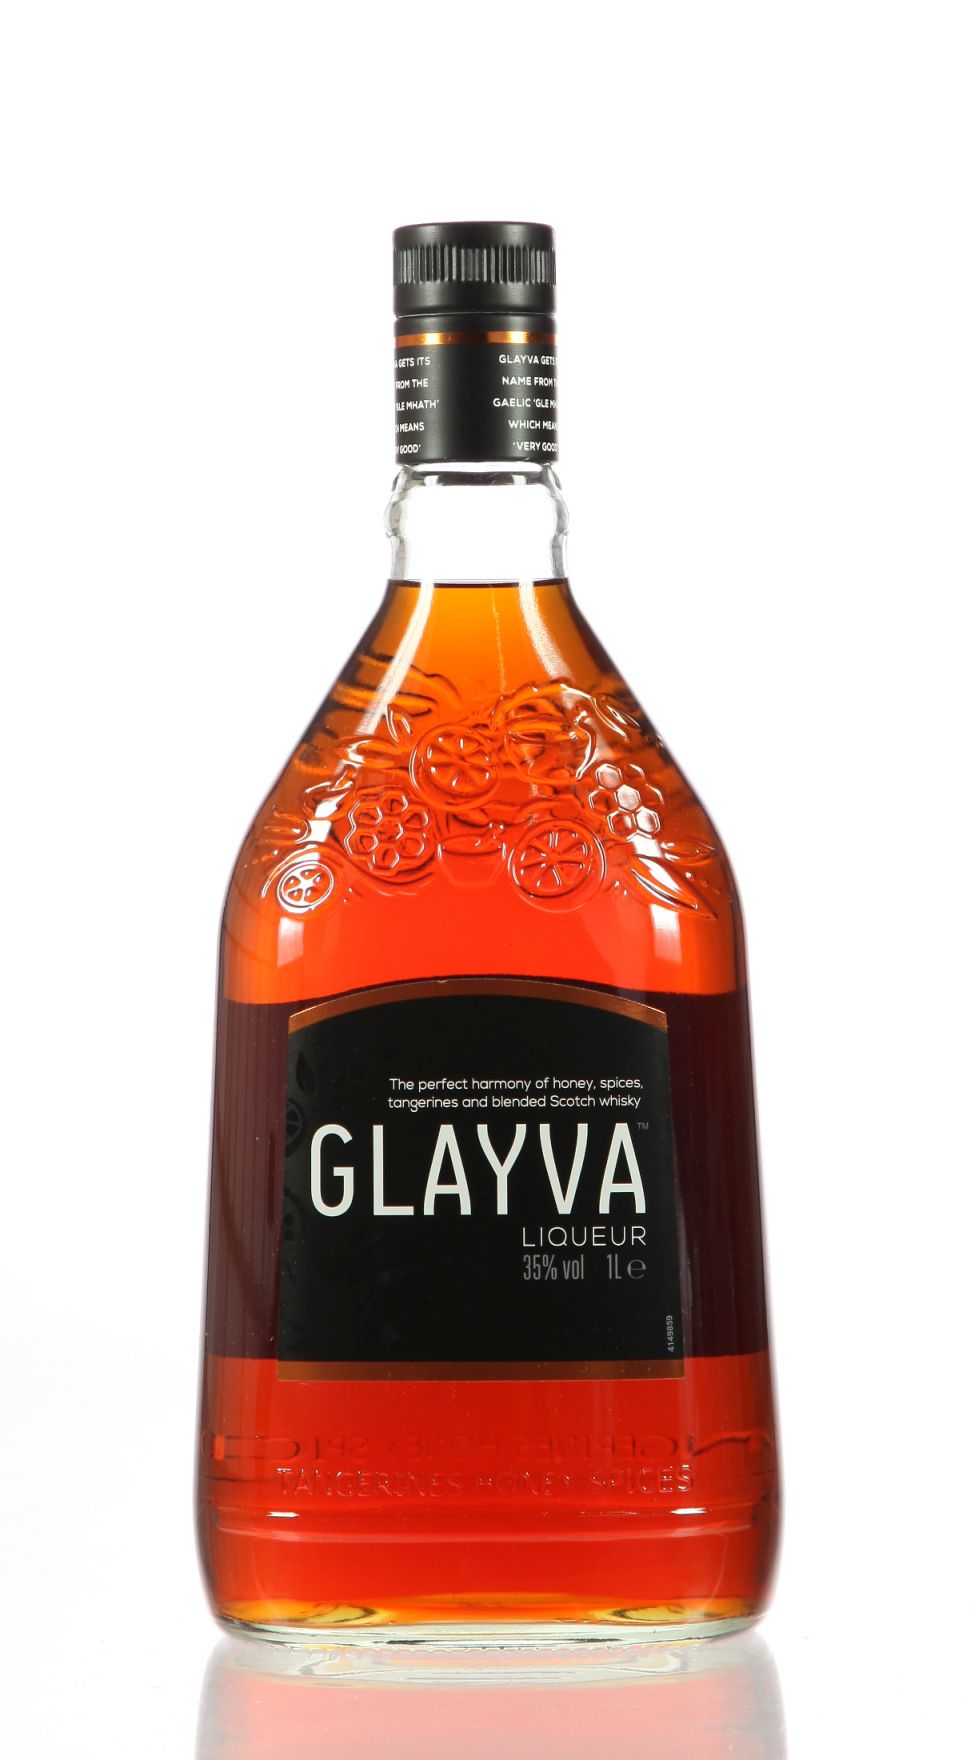 the online | Whisky.de store To Glayva » Liqueur